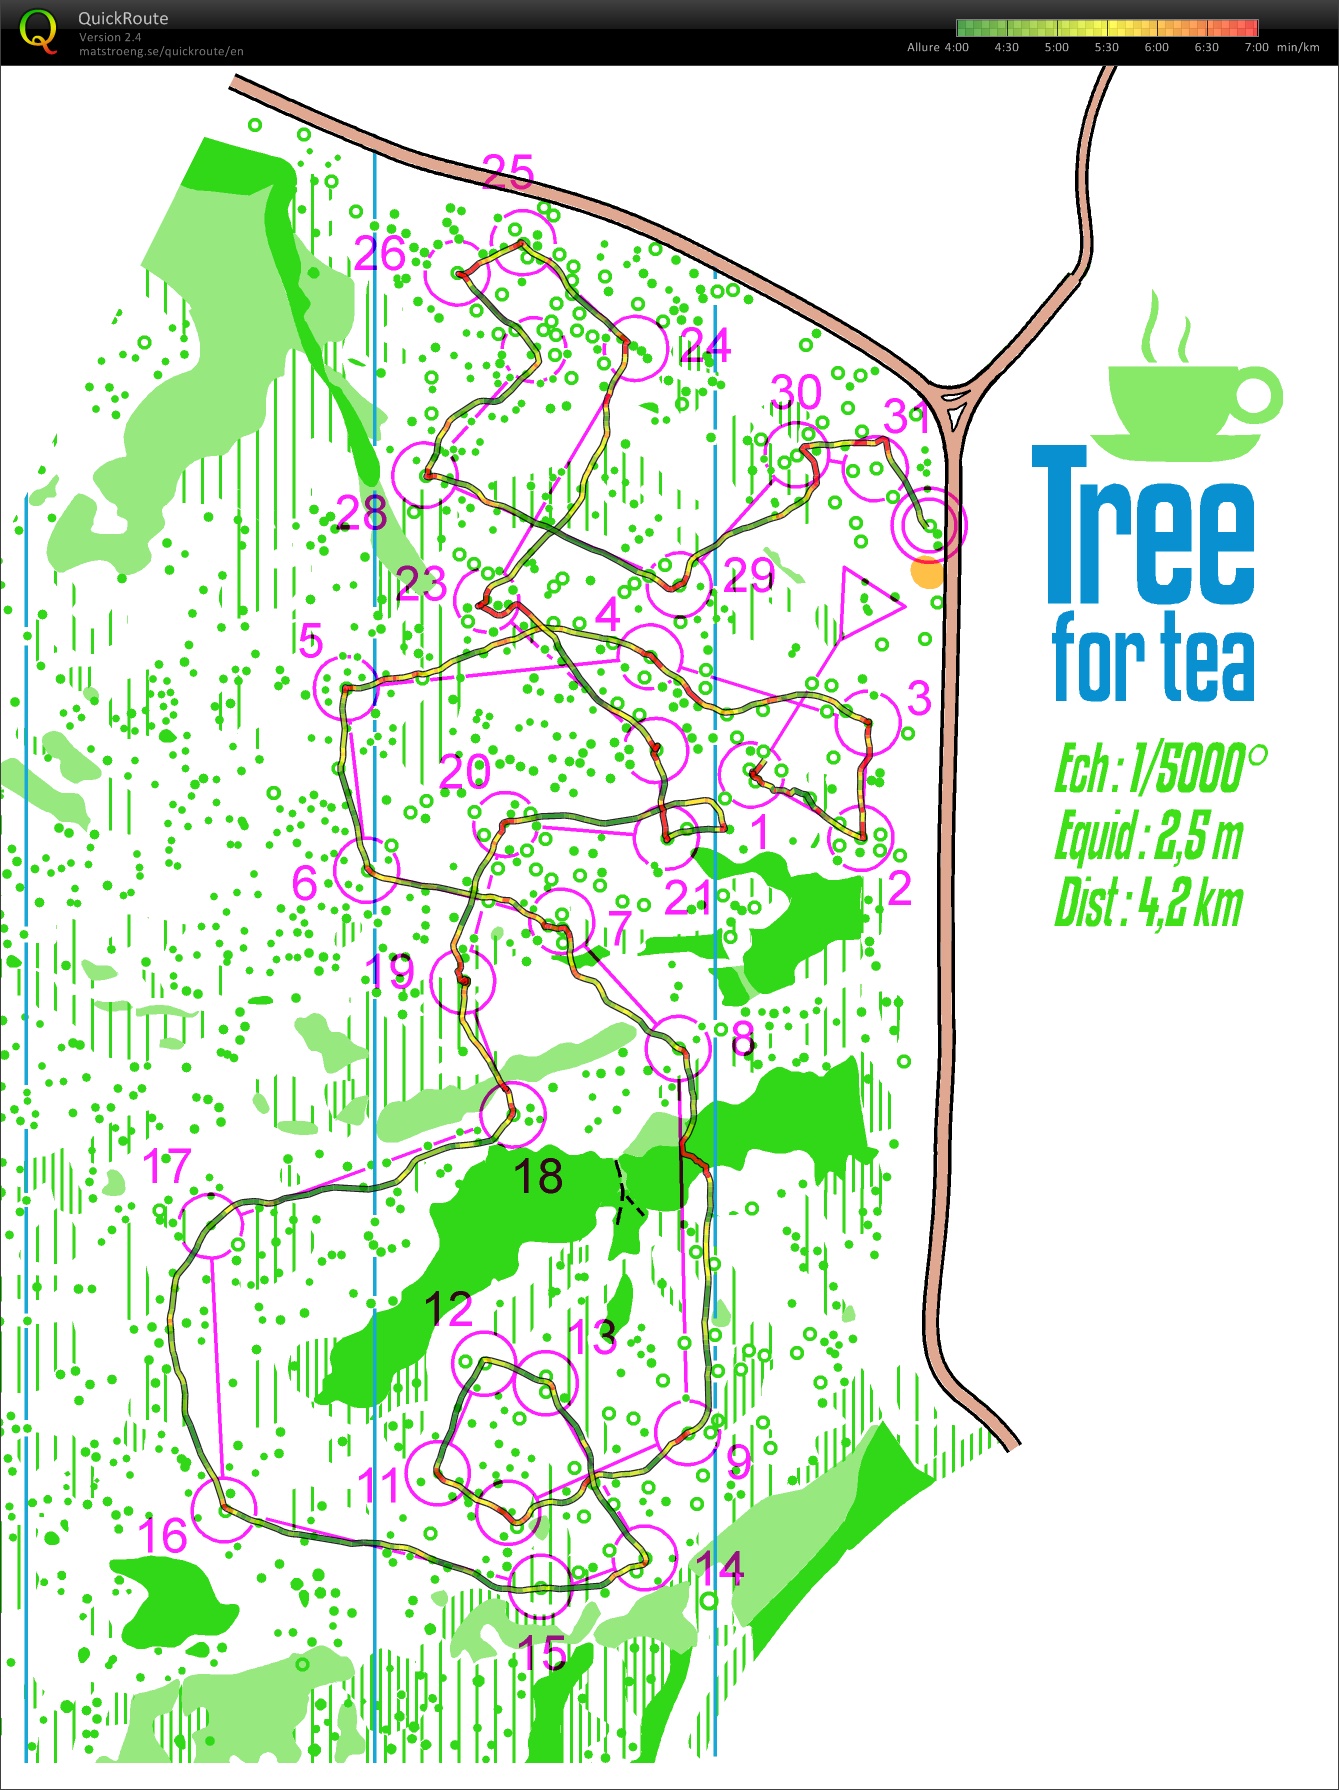 Tree for tea (16/01/2016)